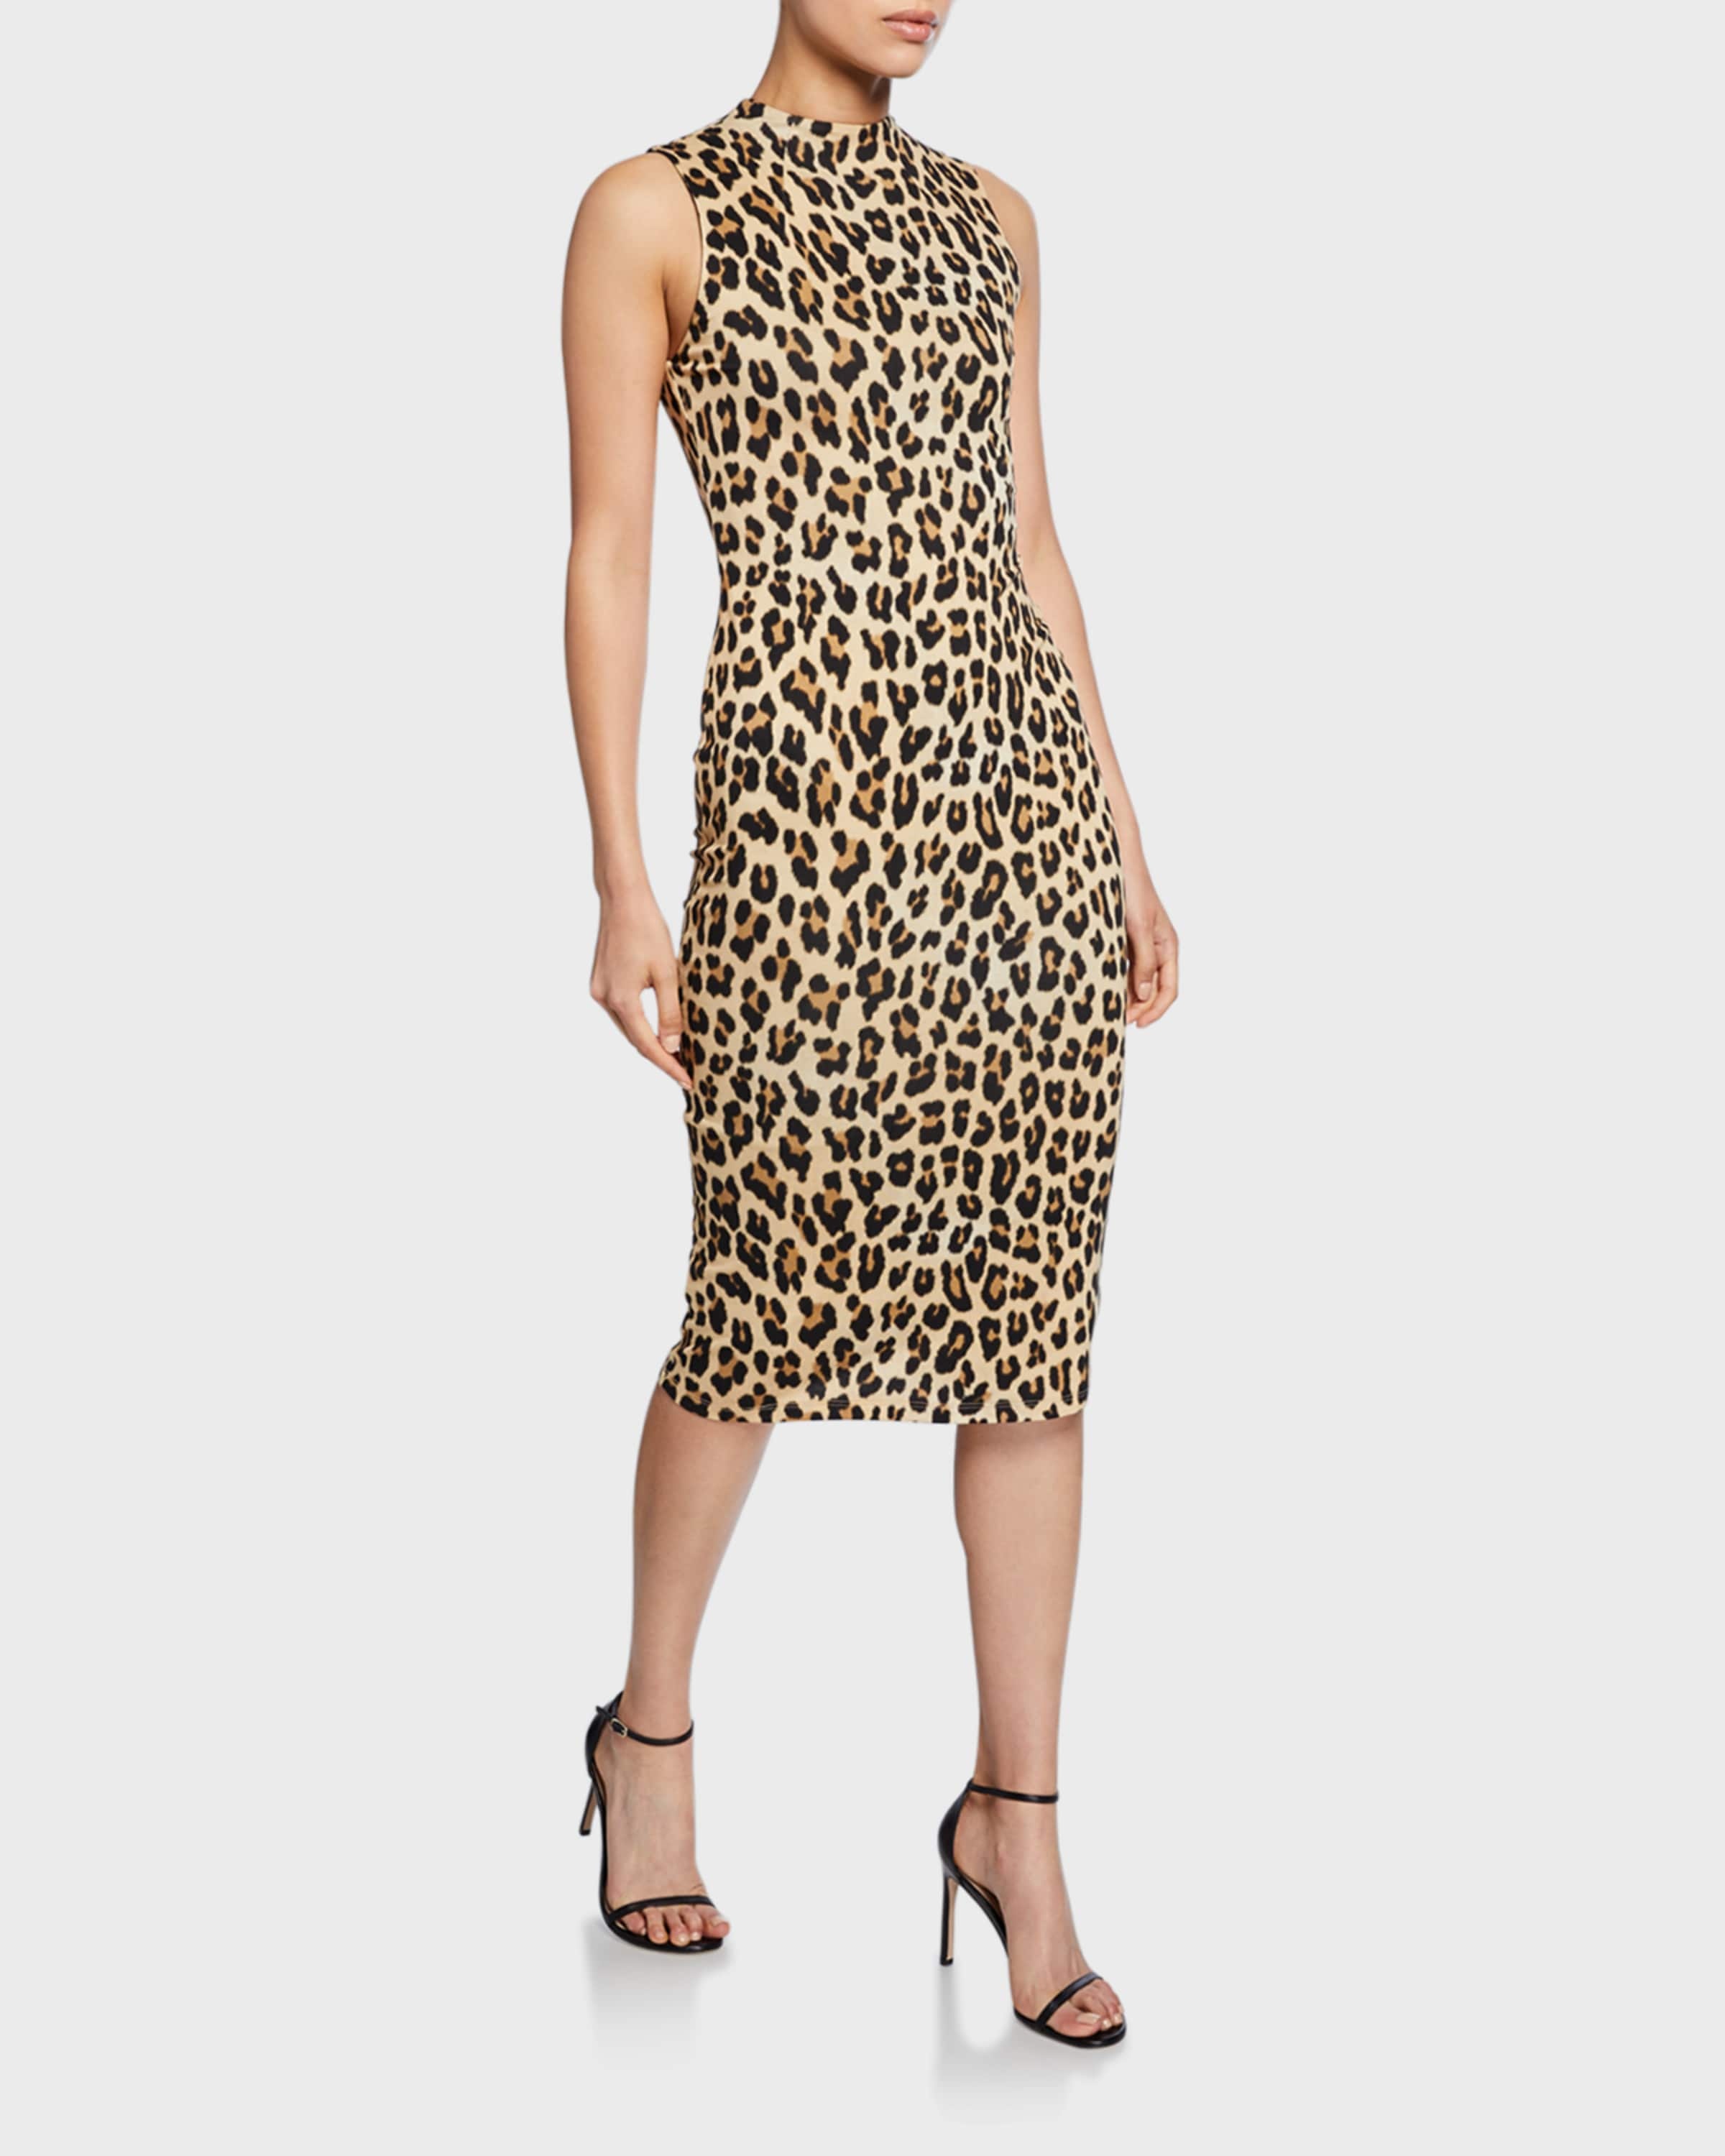 Delora Sleeveless Fitted Leopard Mock-Neck Dress - 1